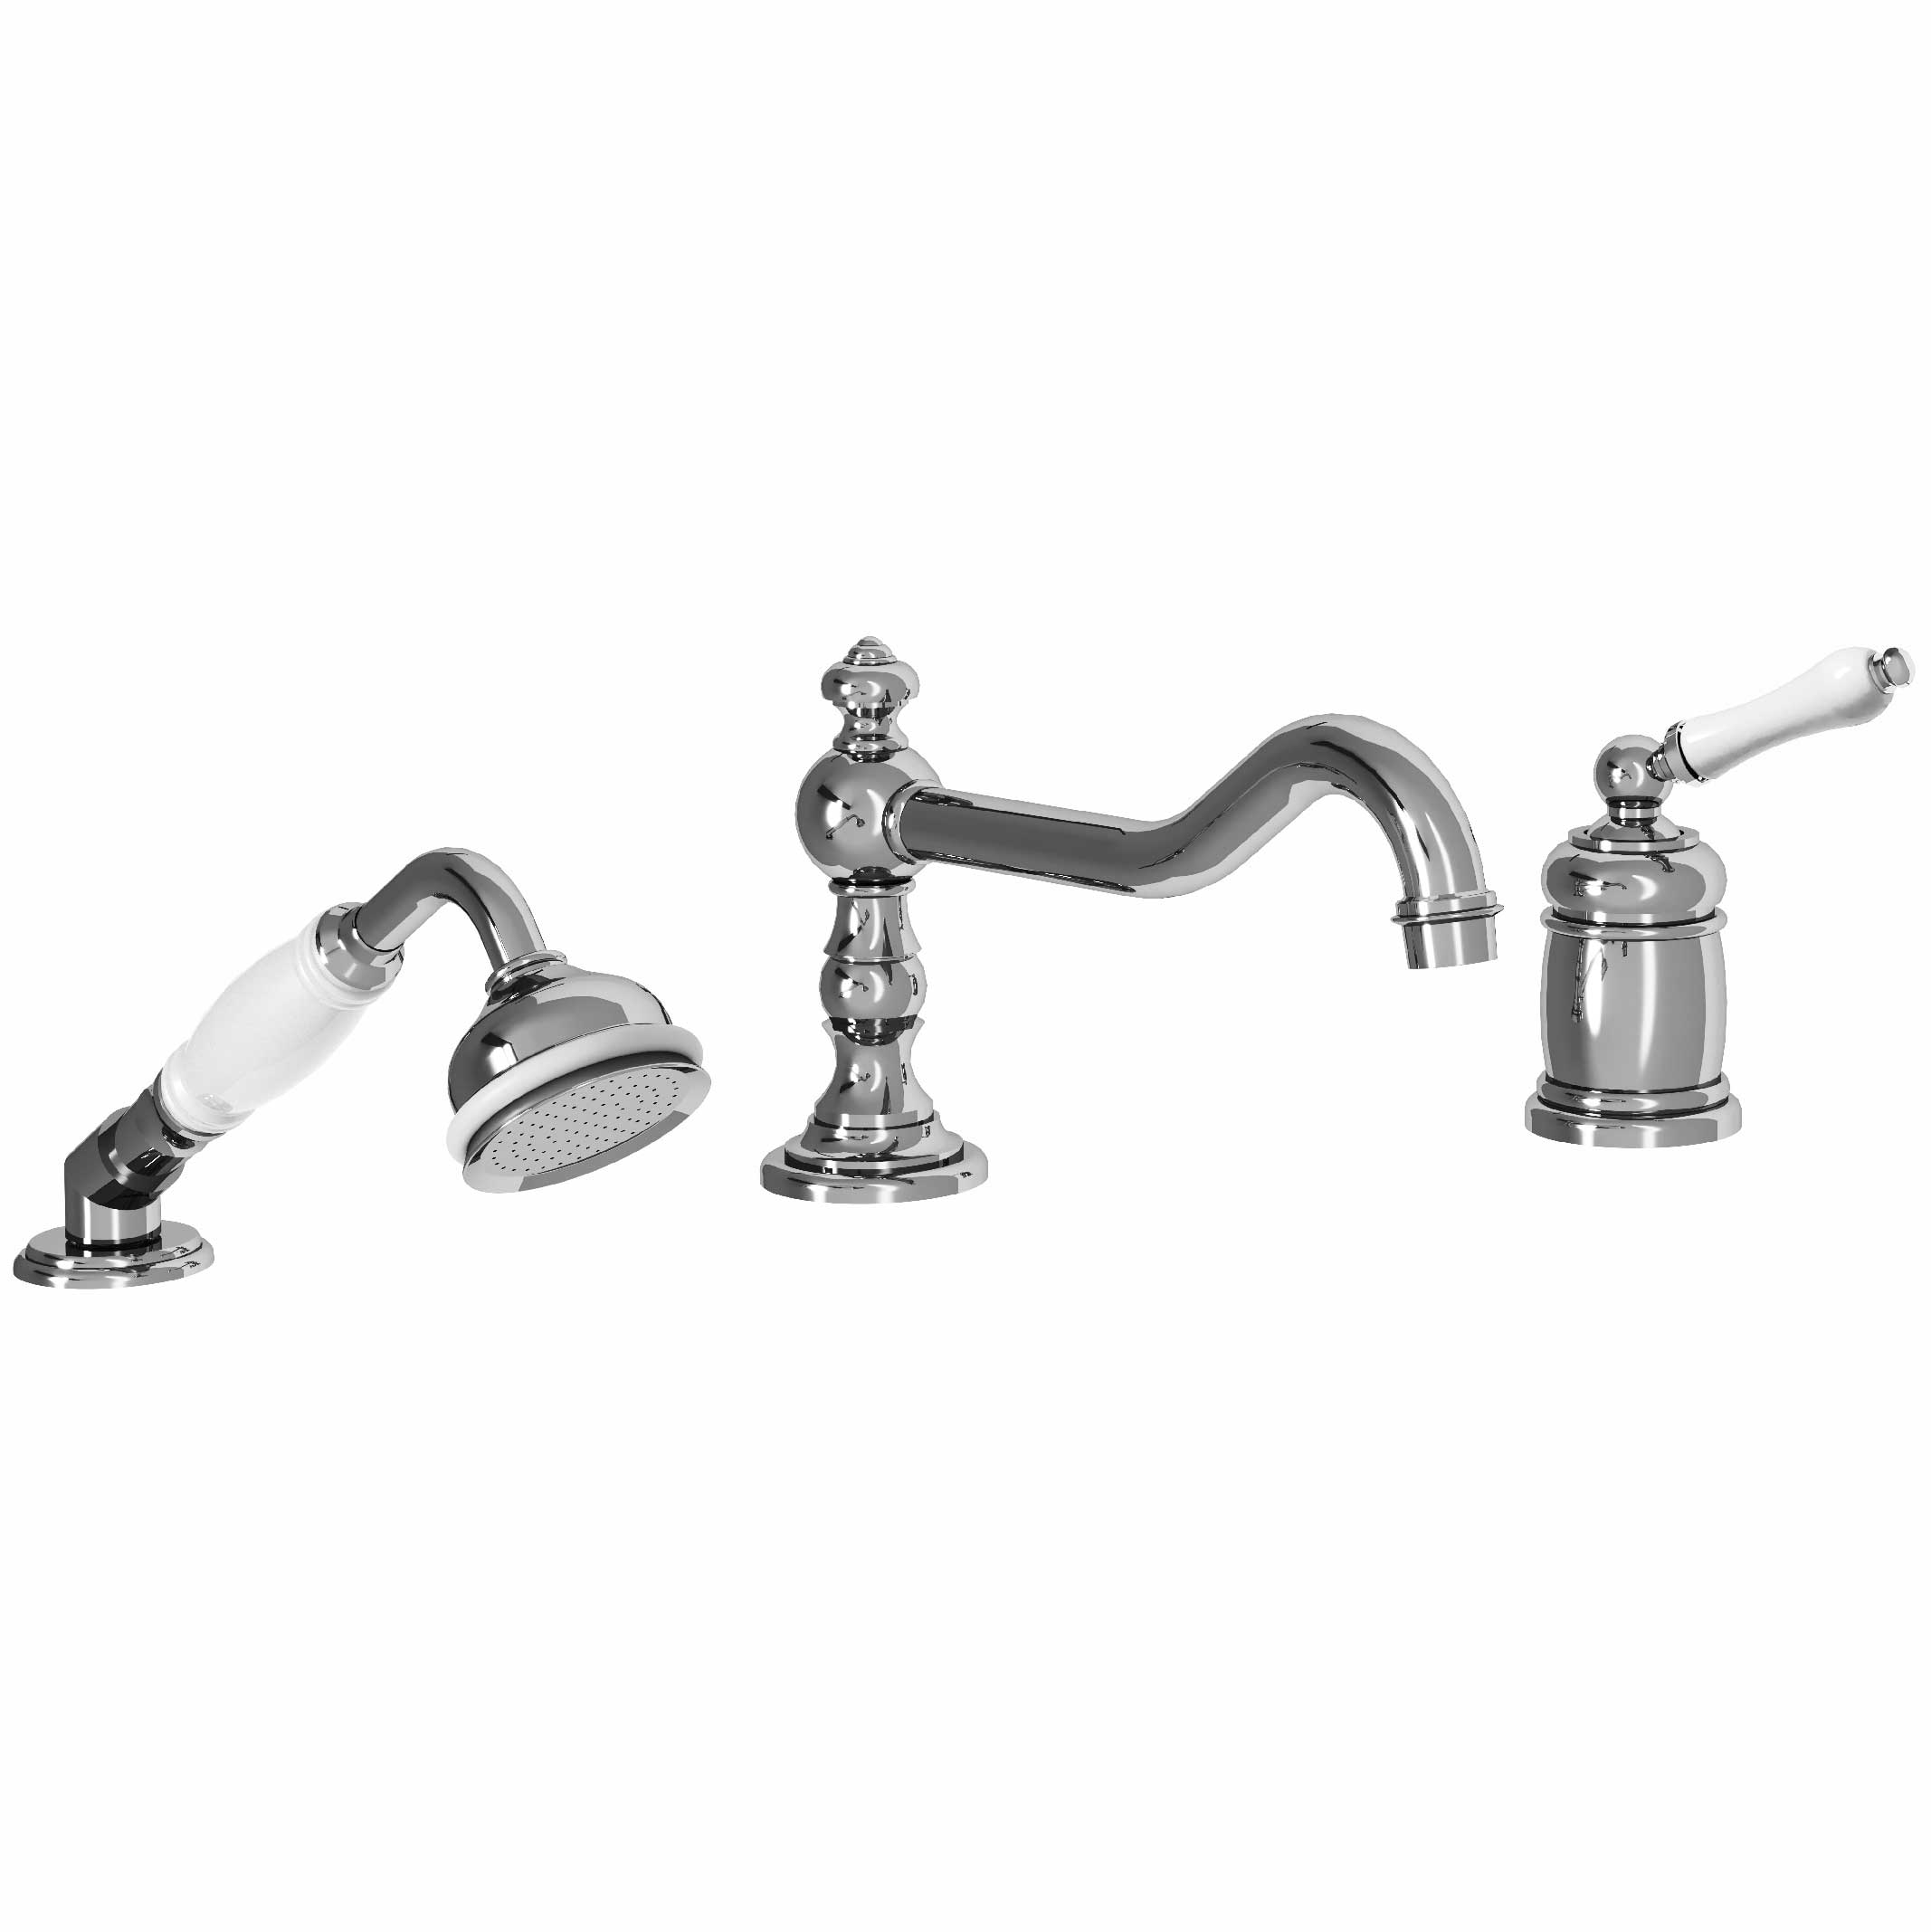 M04-3301MXL XL 3-hole single-lever bath and shower mixer